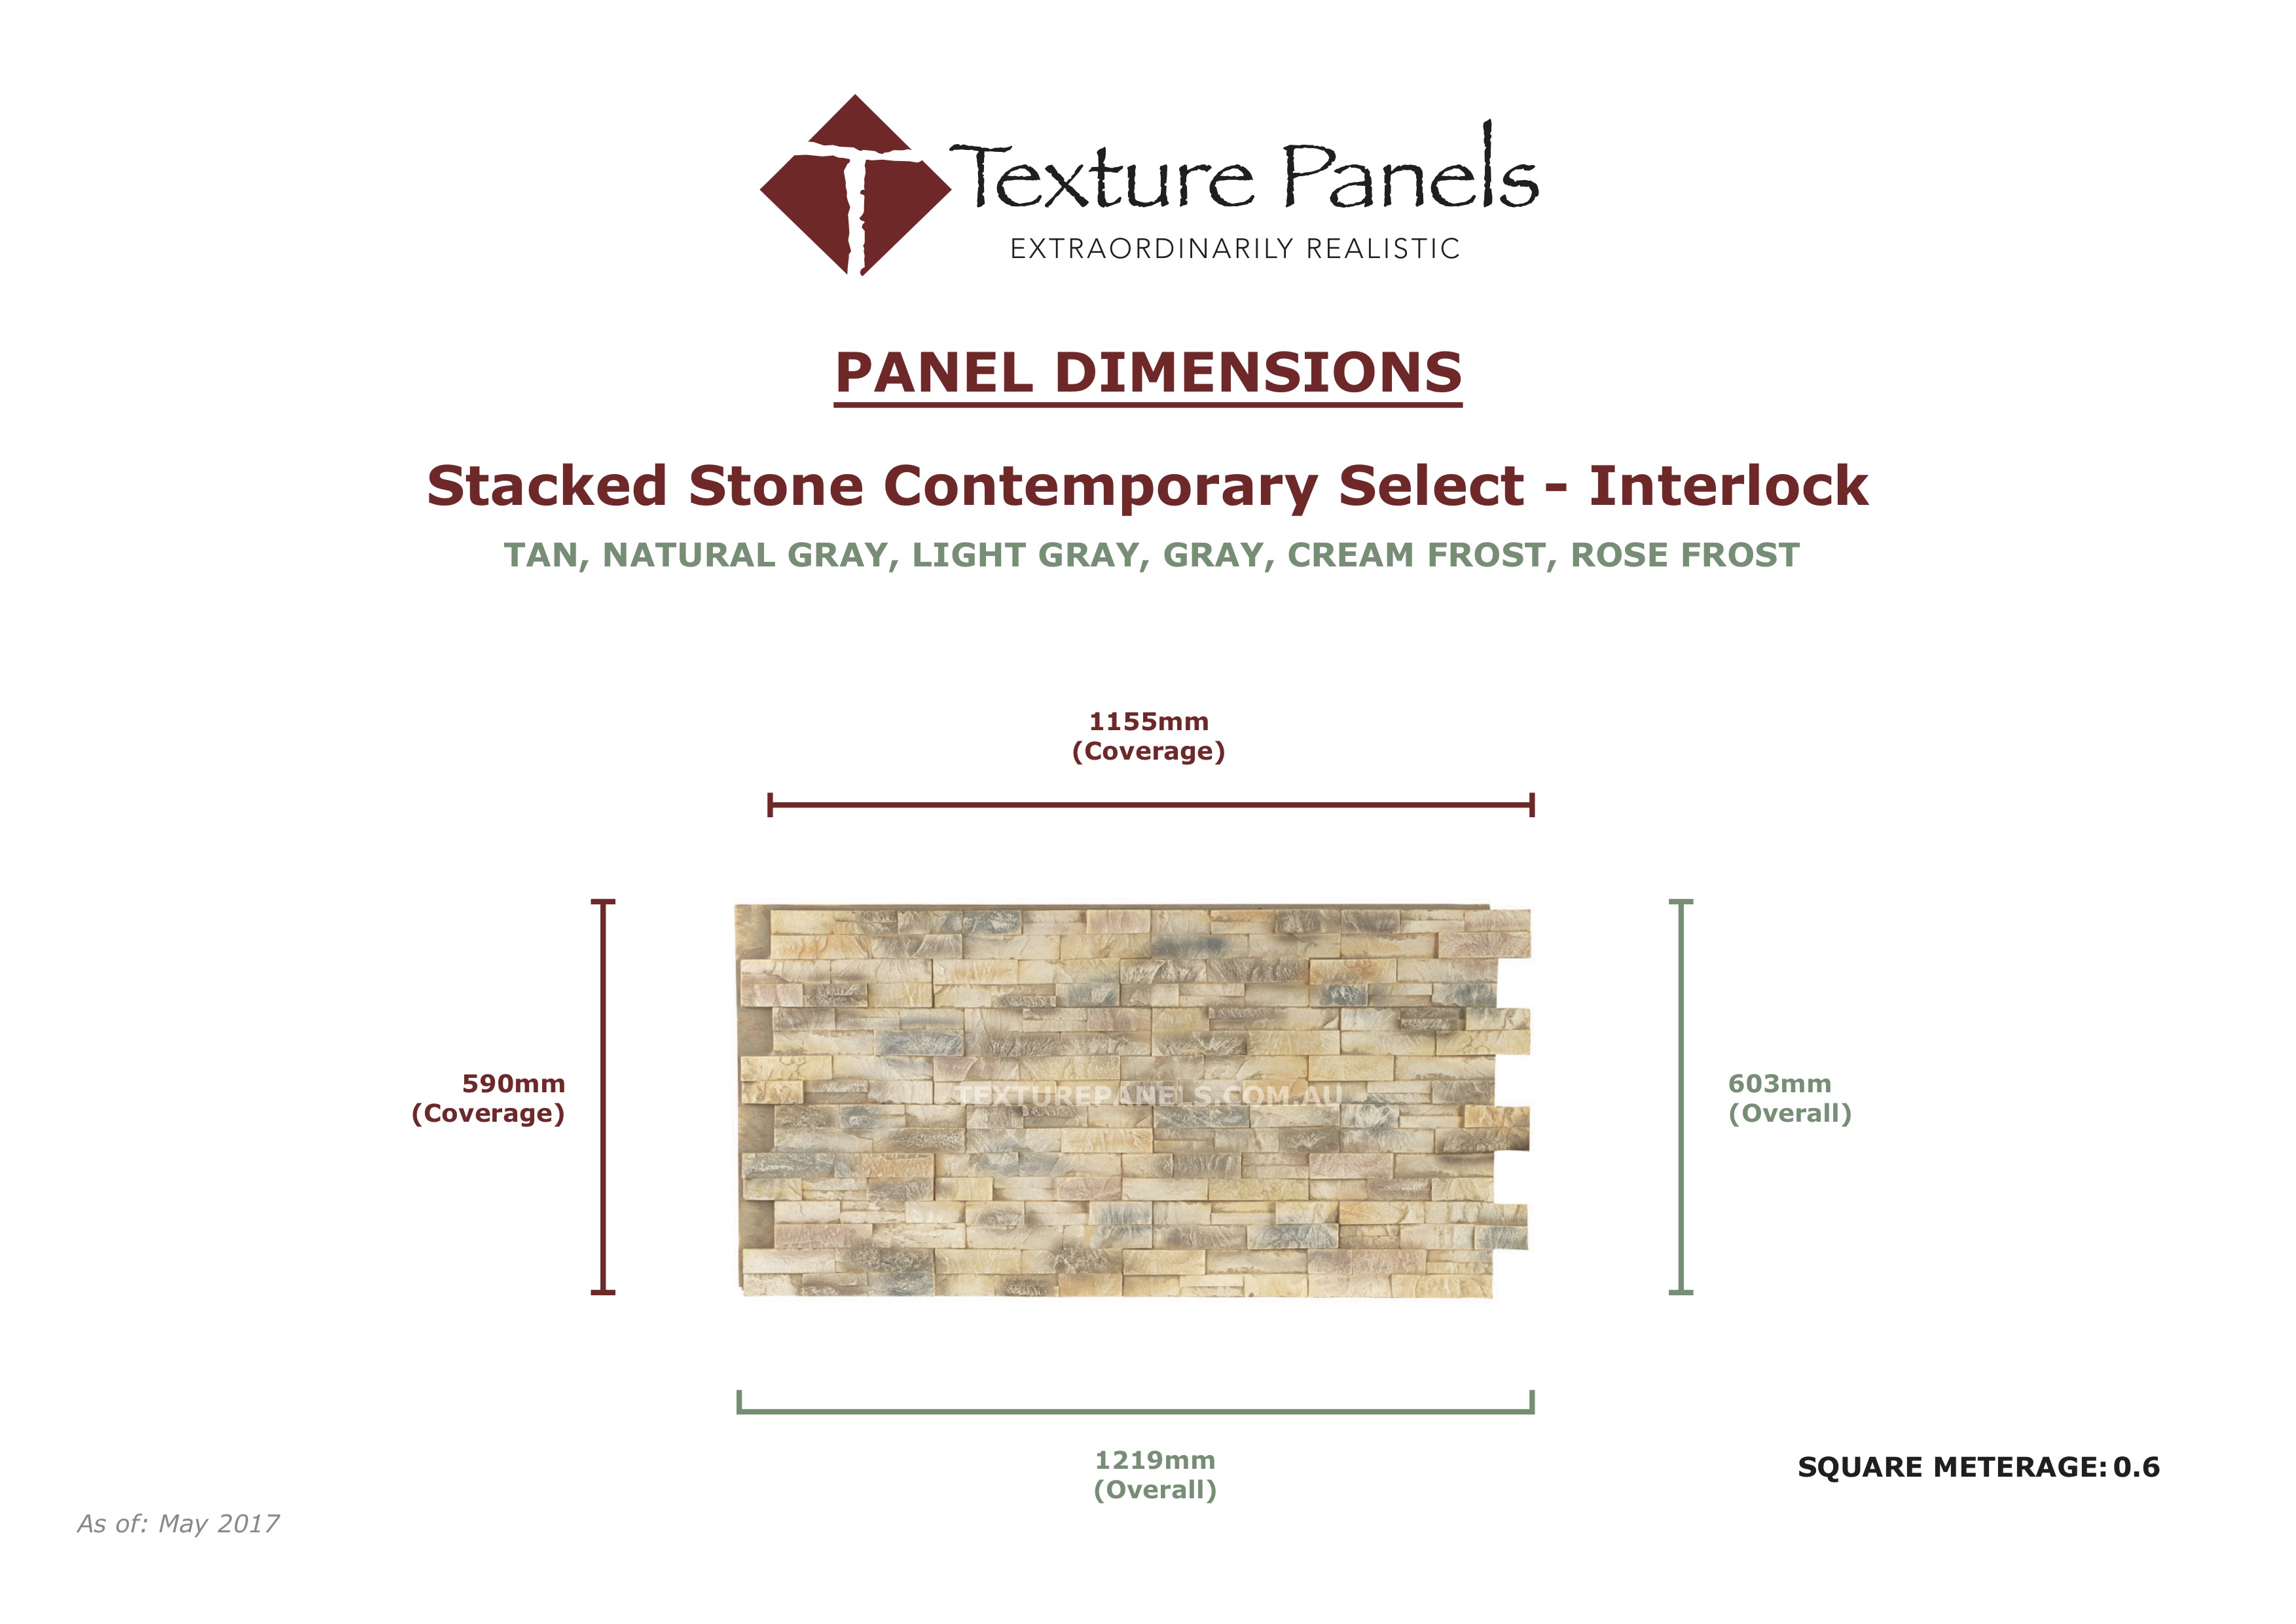 Stacked Stone Contemporary Interlock - Dimensions